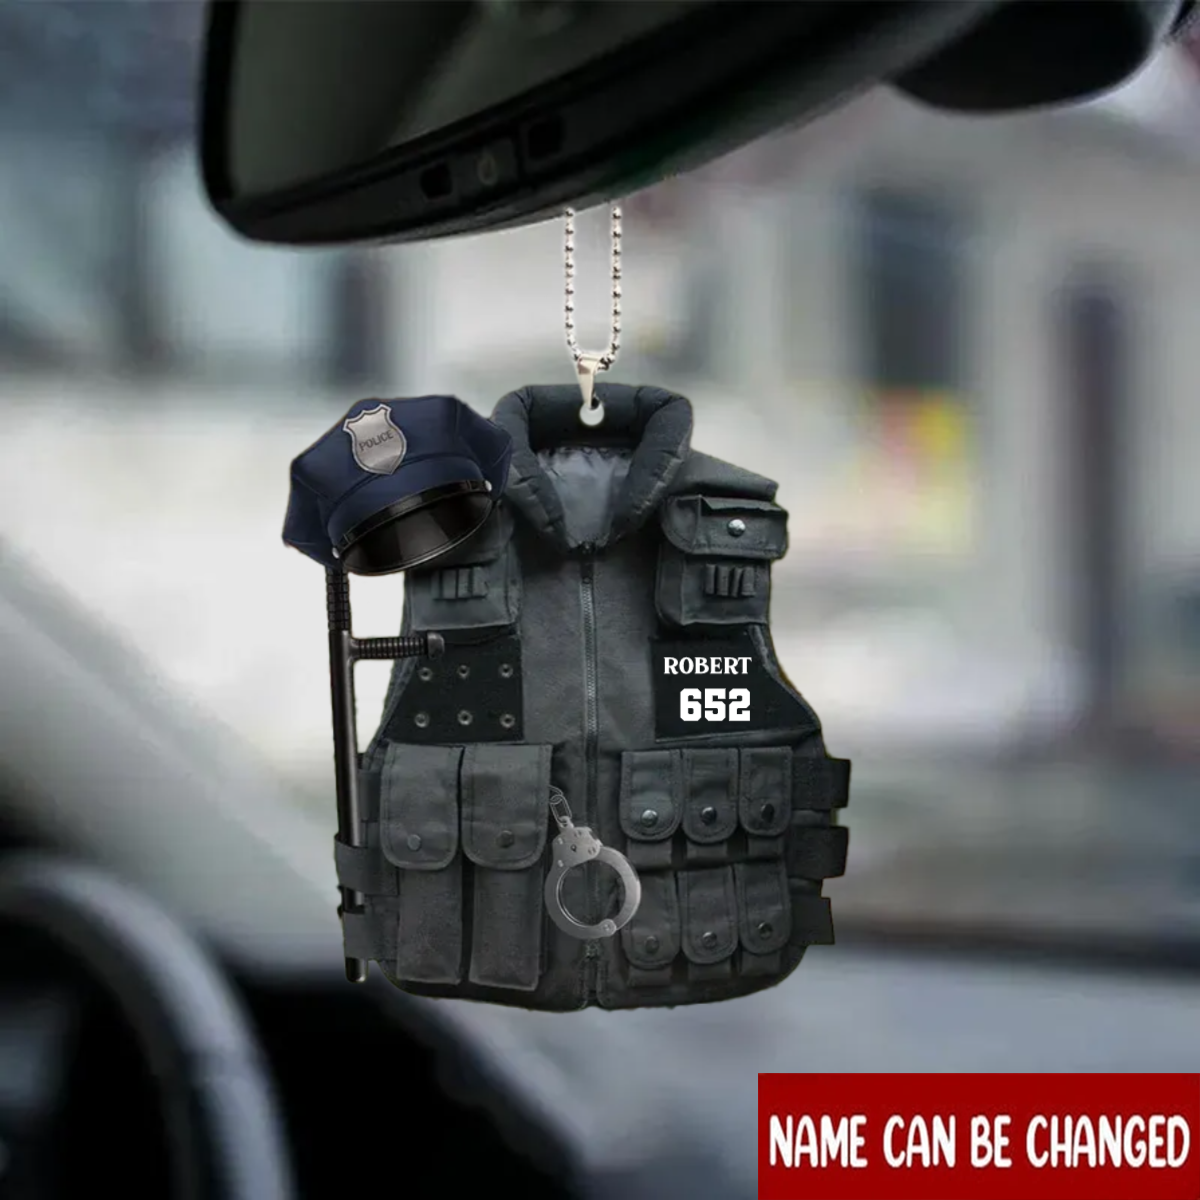 Police Bulletproof Vest Personalized Shaped Hanging Ornament For Car